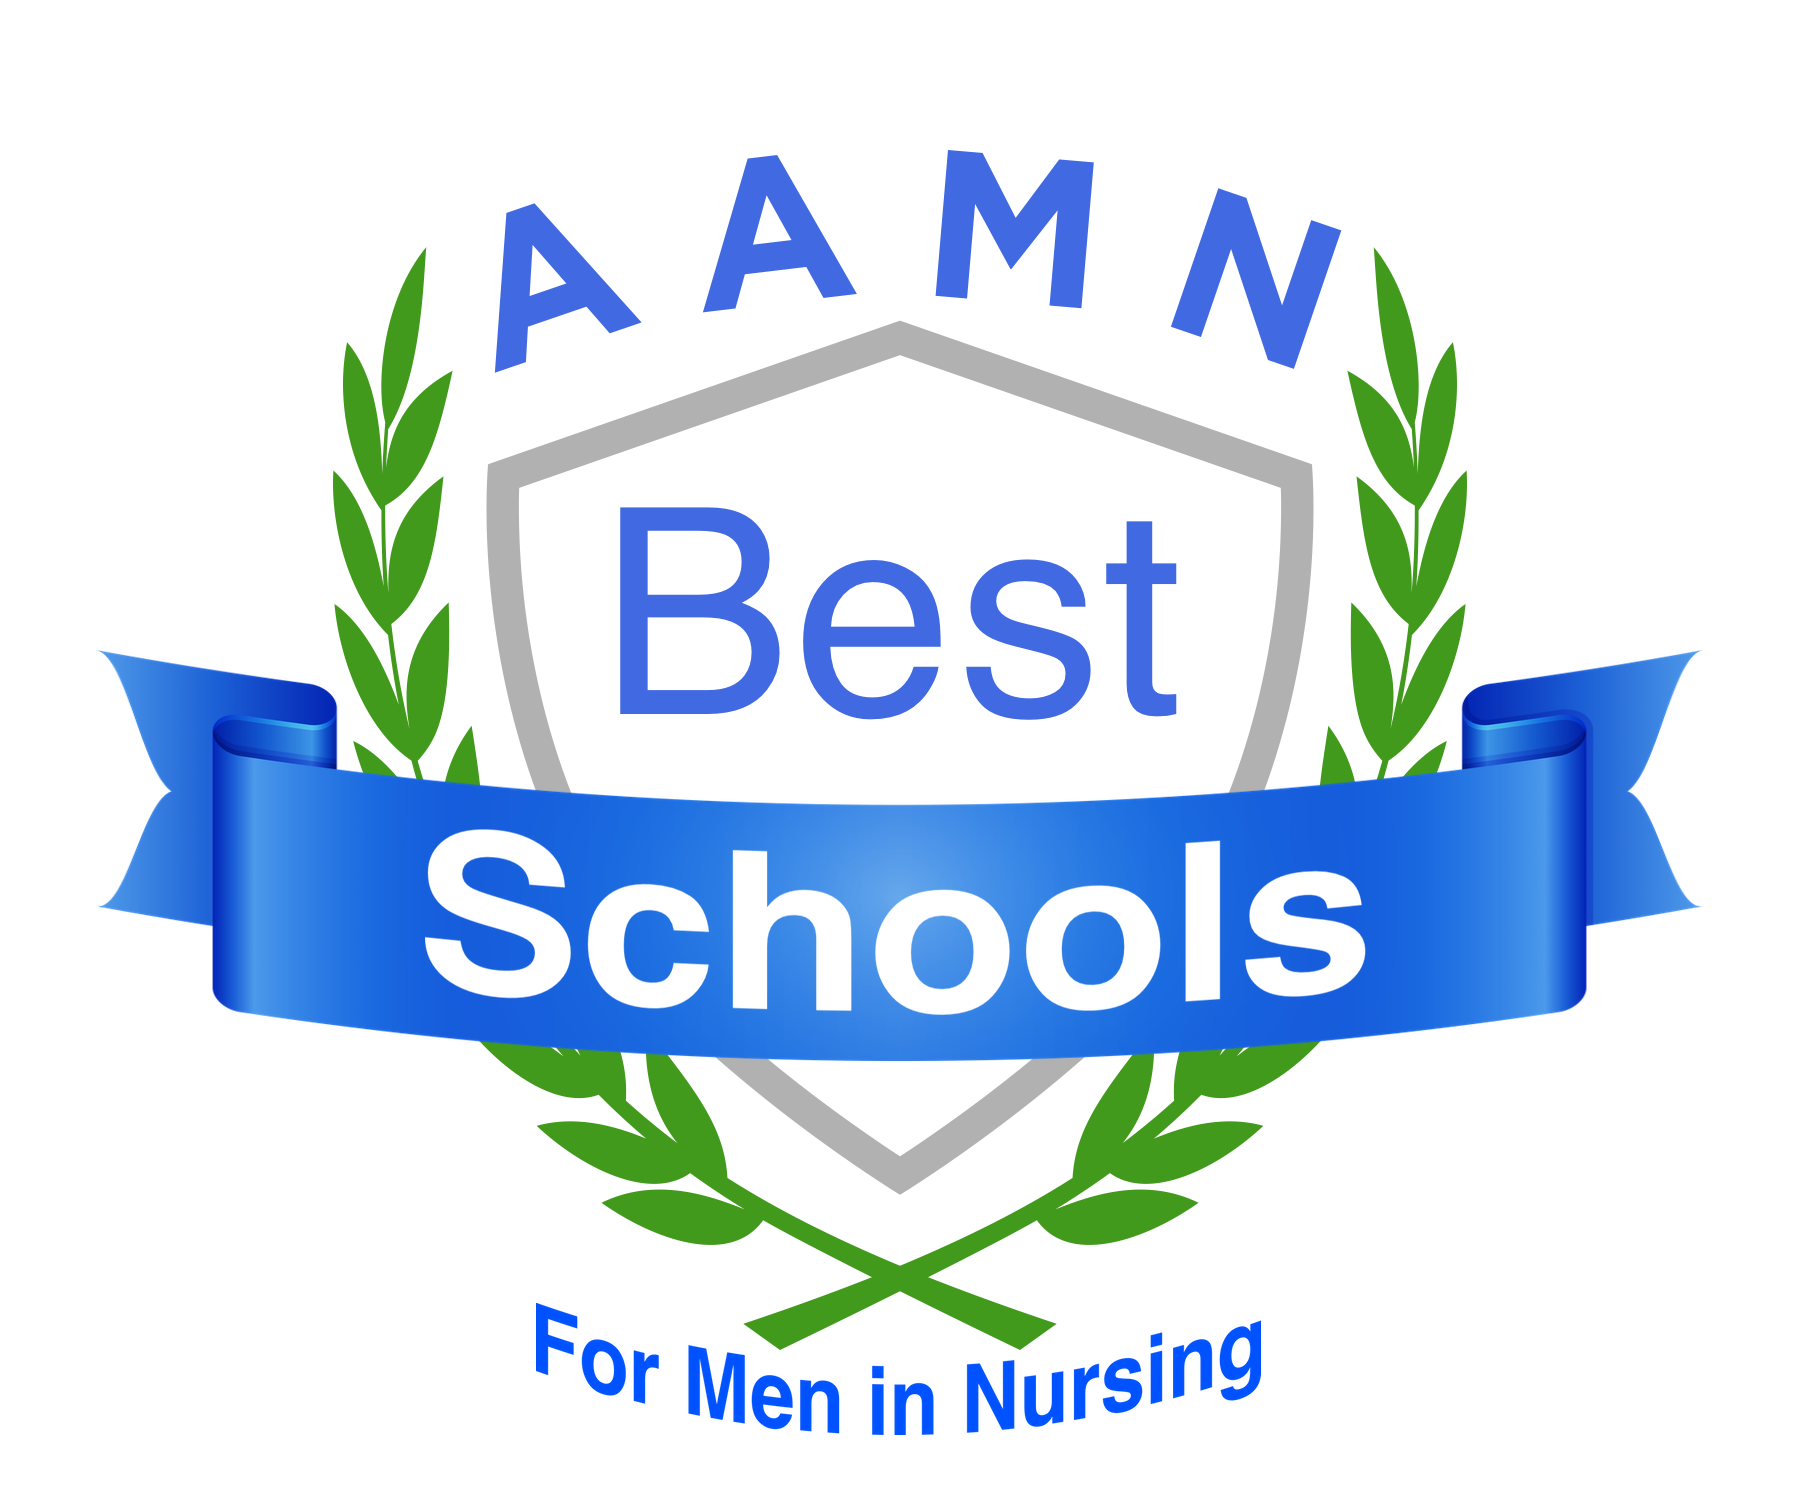 AAMN Best School for men in nursing award